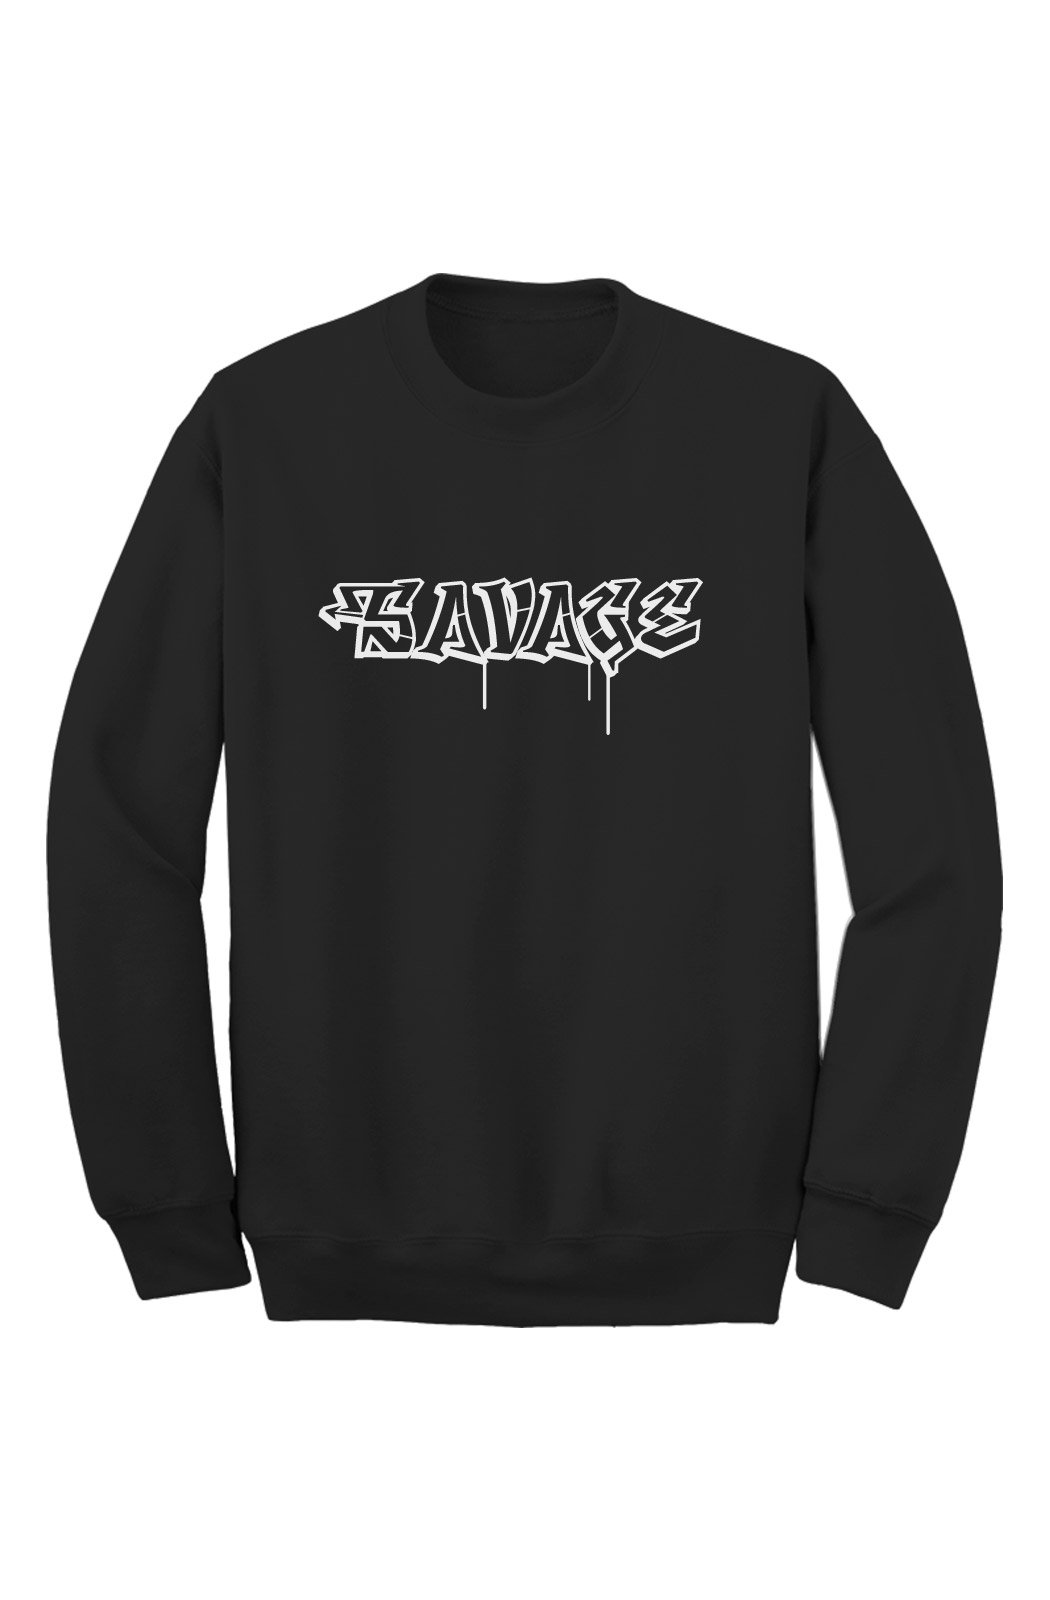 mfla-streetwear-savage-black-crew-sweater